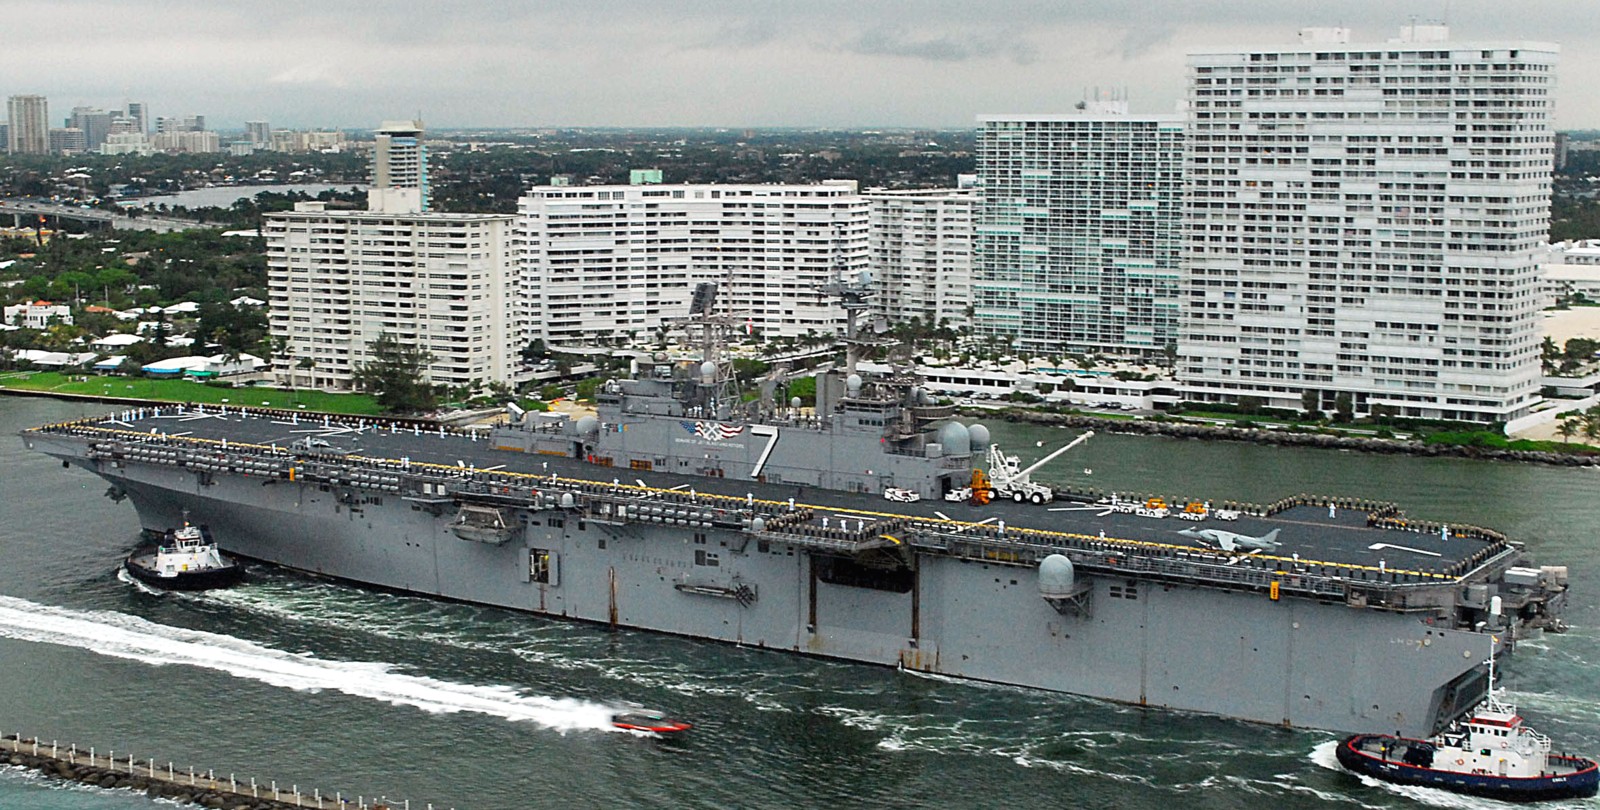 lhd-7 uss iwo jima wasp class amphibious assault ship dock landing helicopter us navy fort lauderdale florida 76